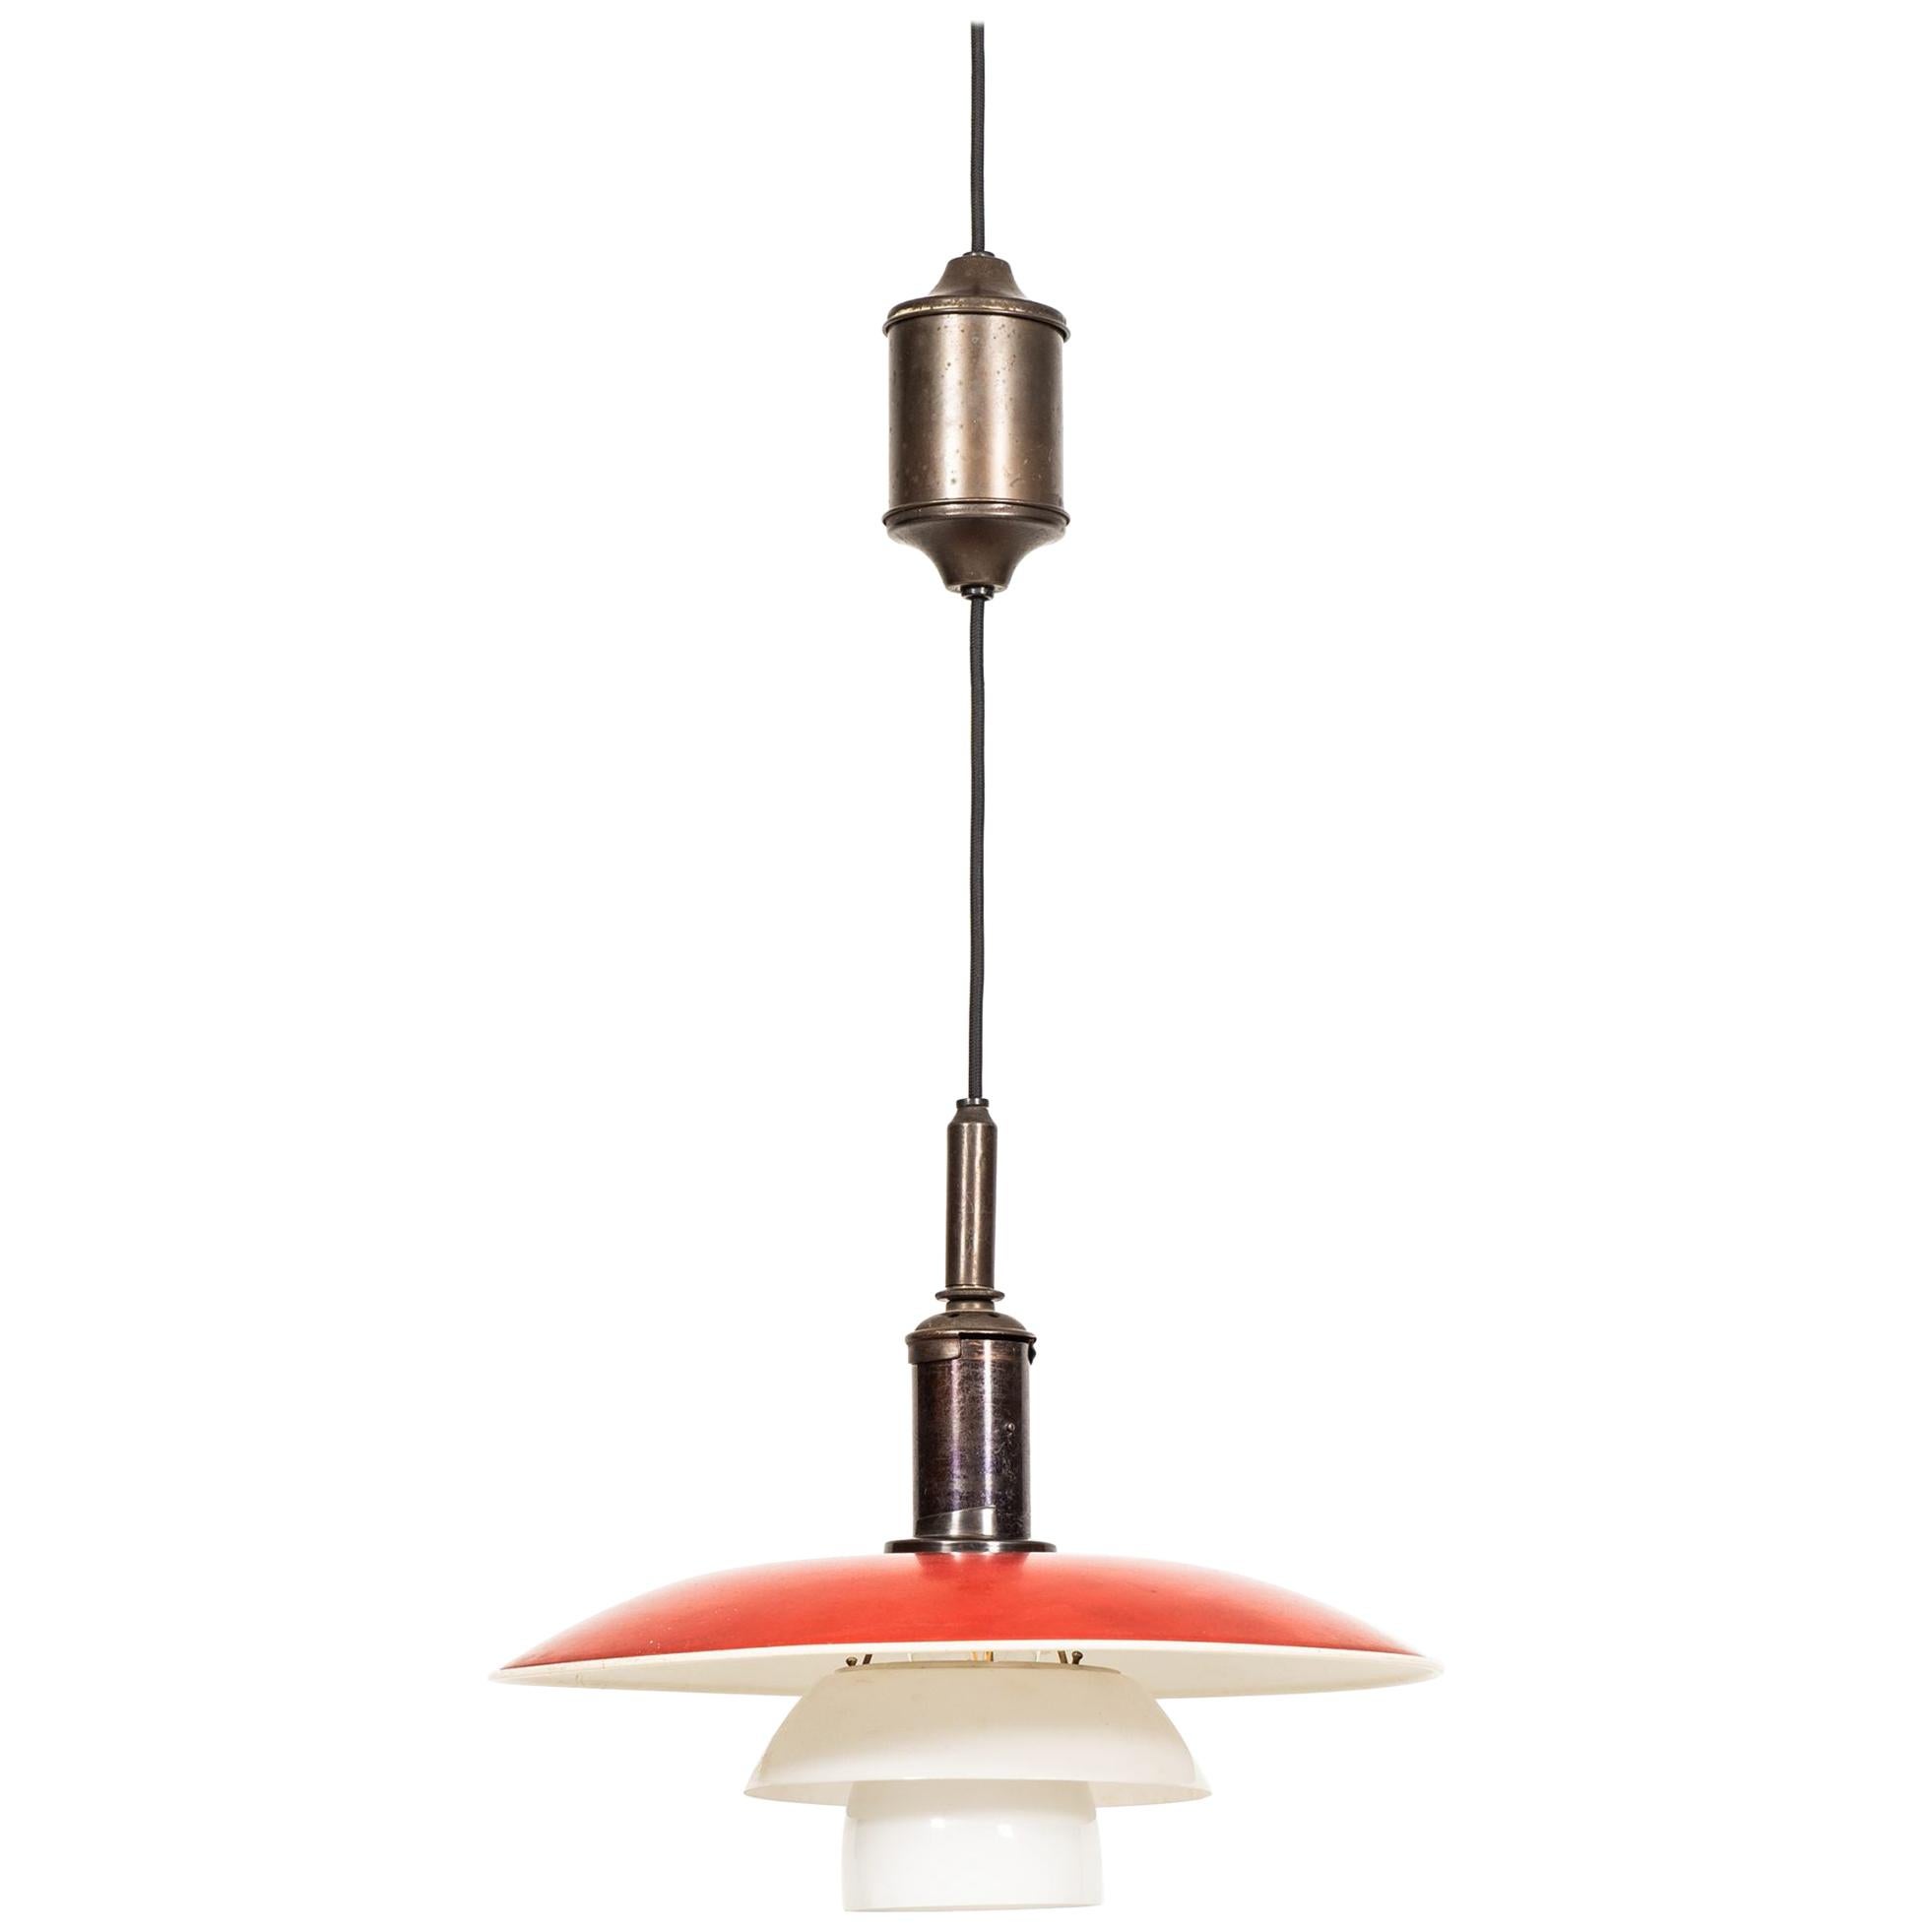 Poul Henningsen Ceiling Lamp Produced by Louis Poulsen in Denmark